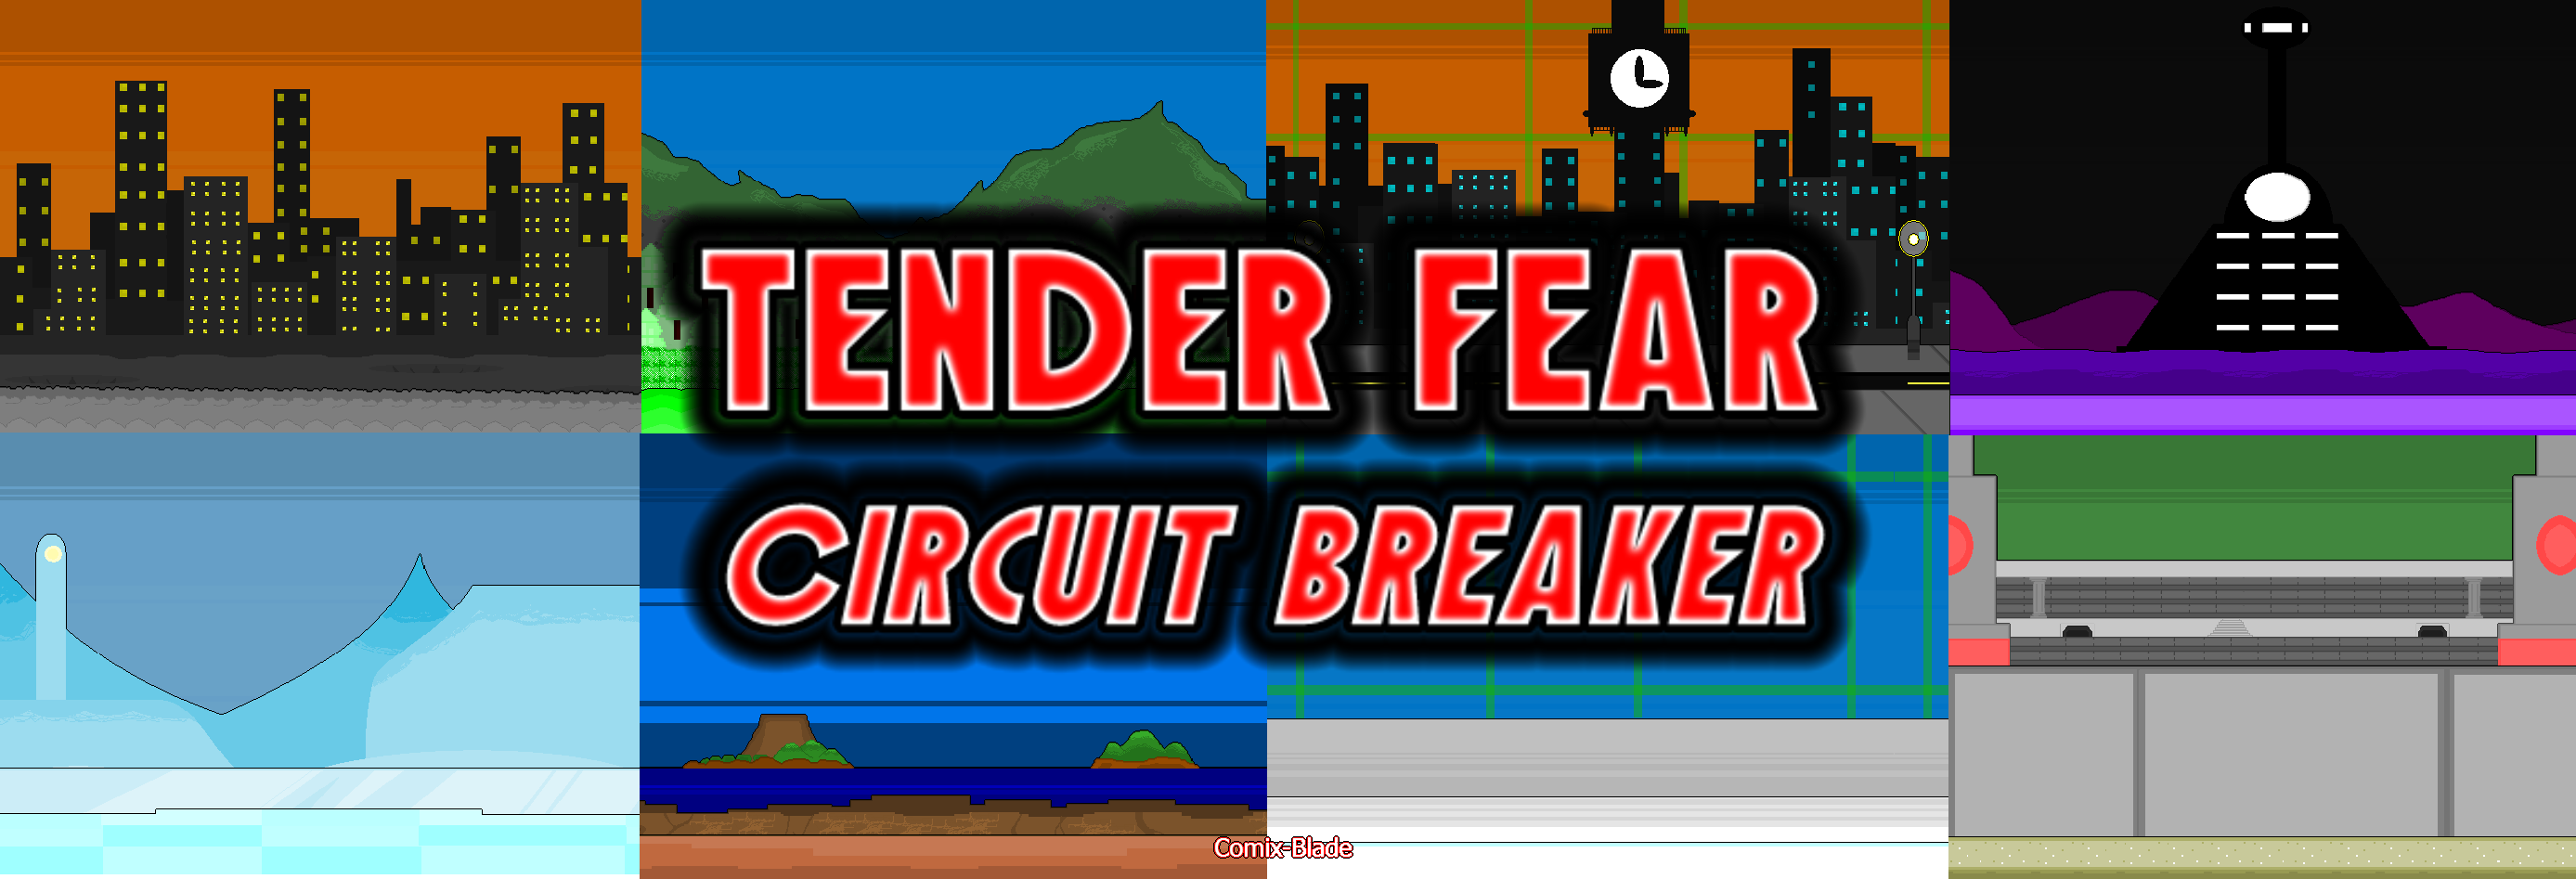 Tender Fear - Circuit Breaker